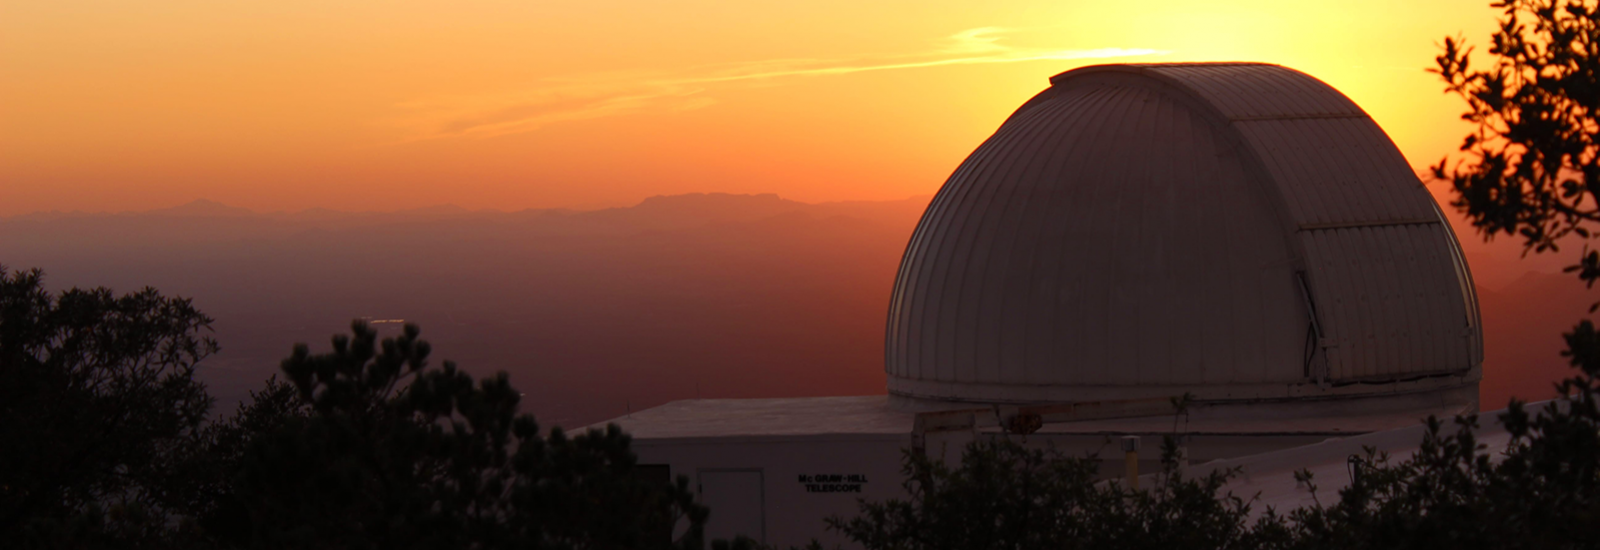 MDM Observatory at sunset. Artist: Nikki Justice